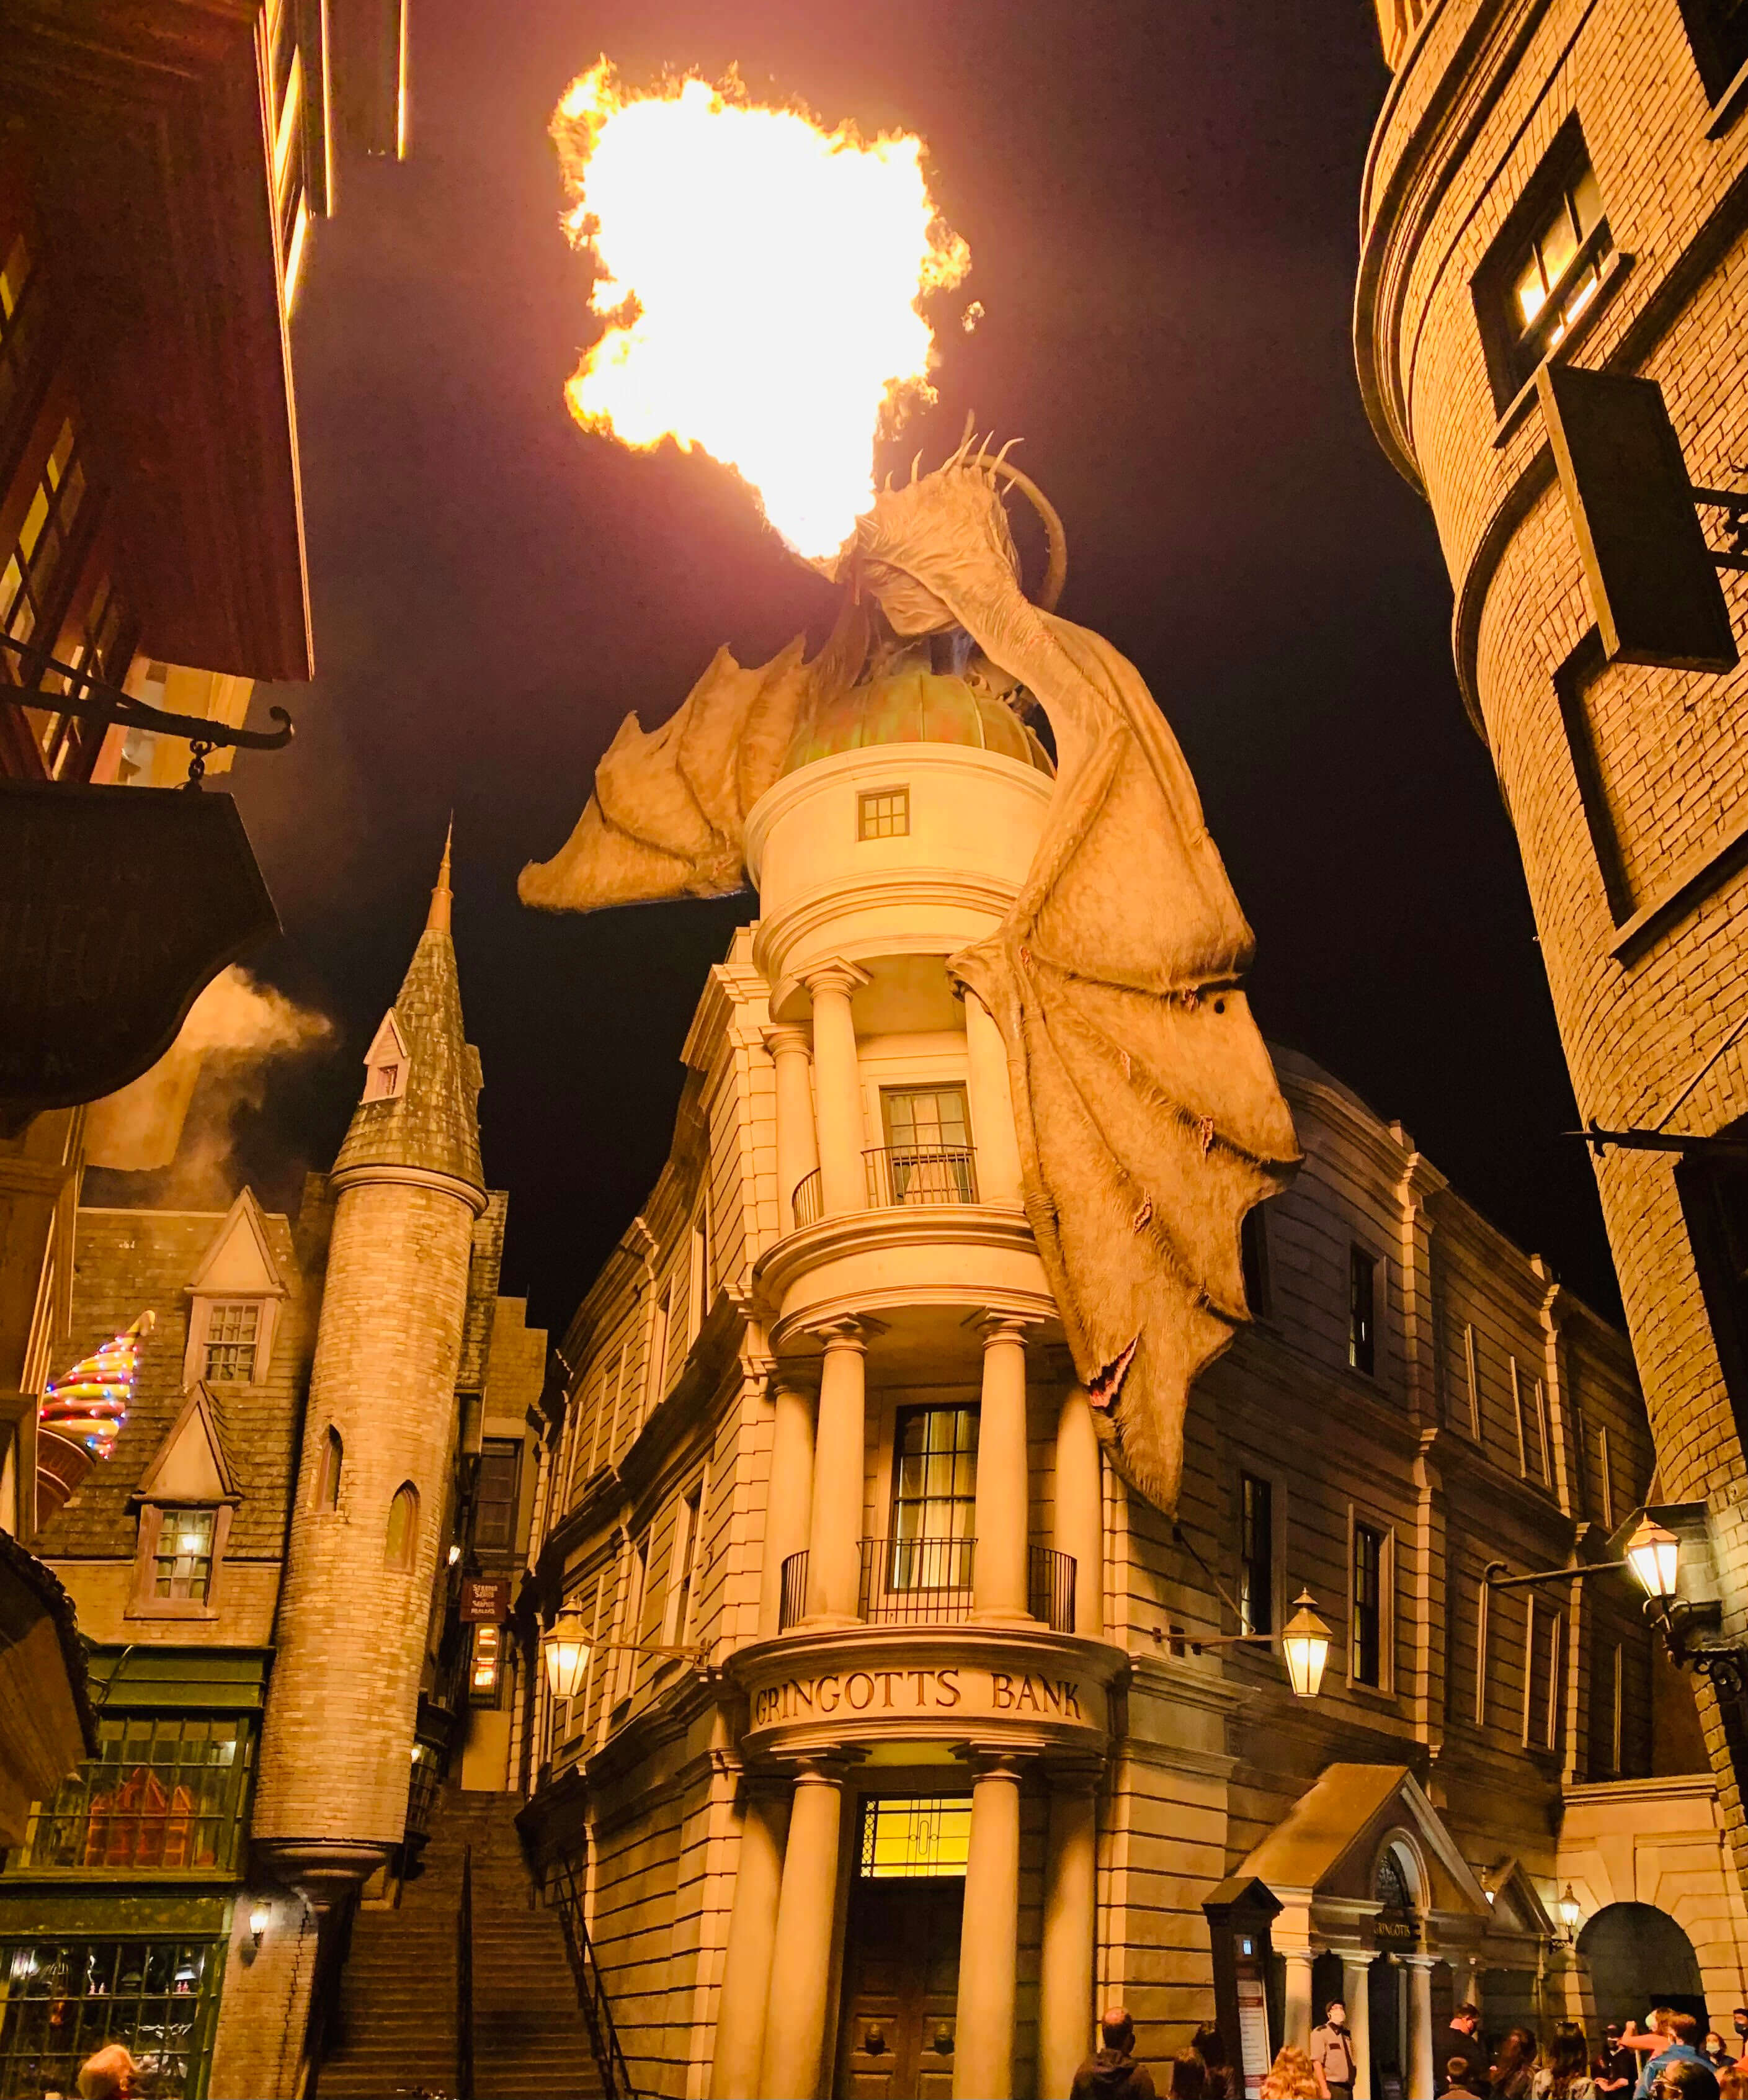 Diagon Alley fire breathing dragon